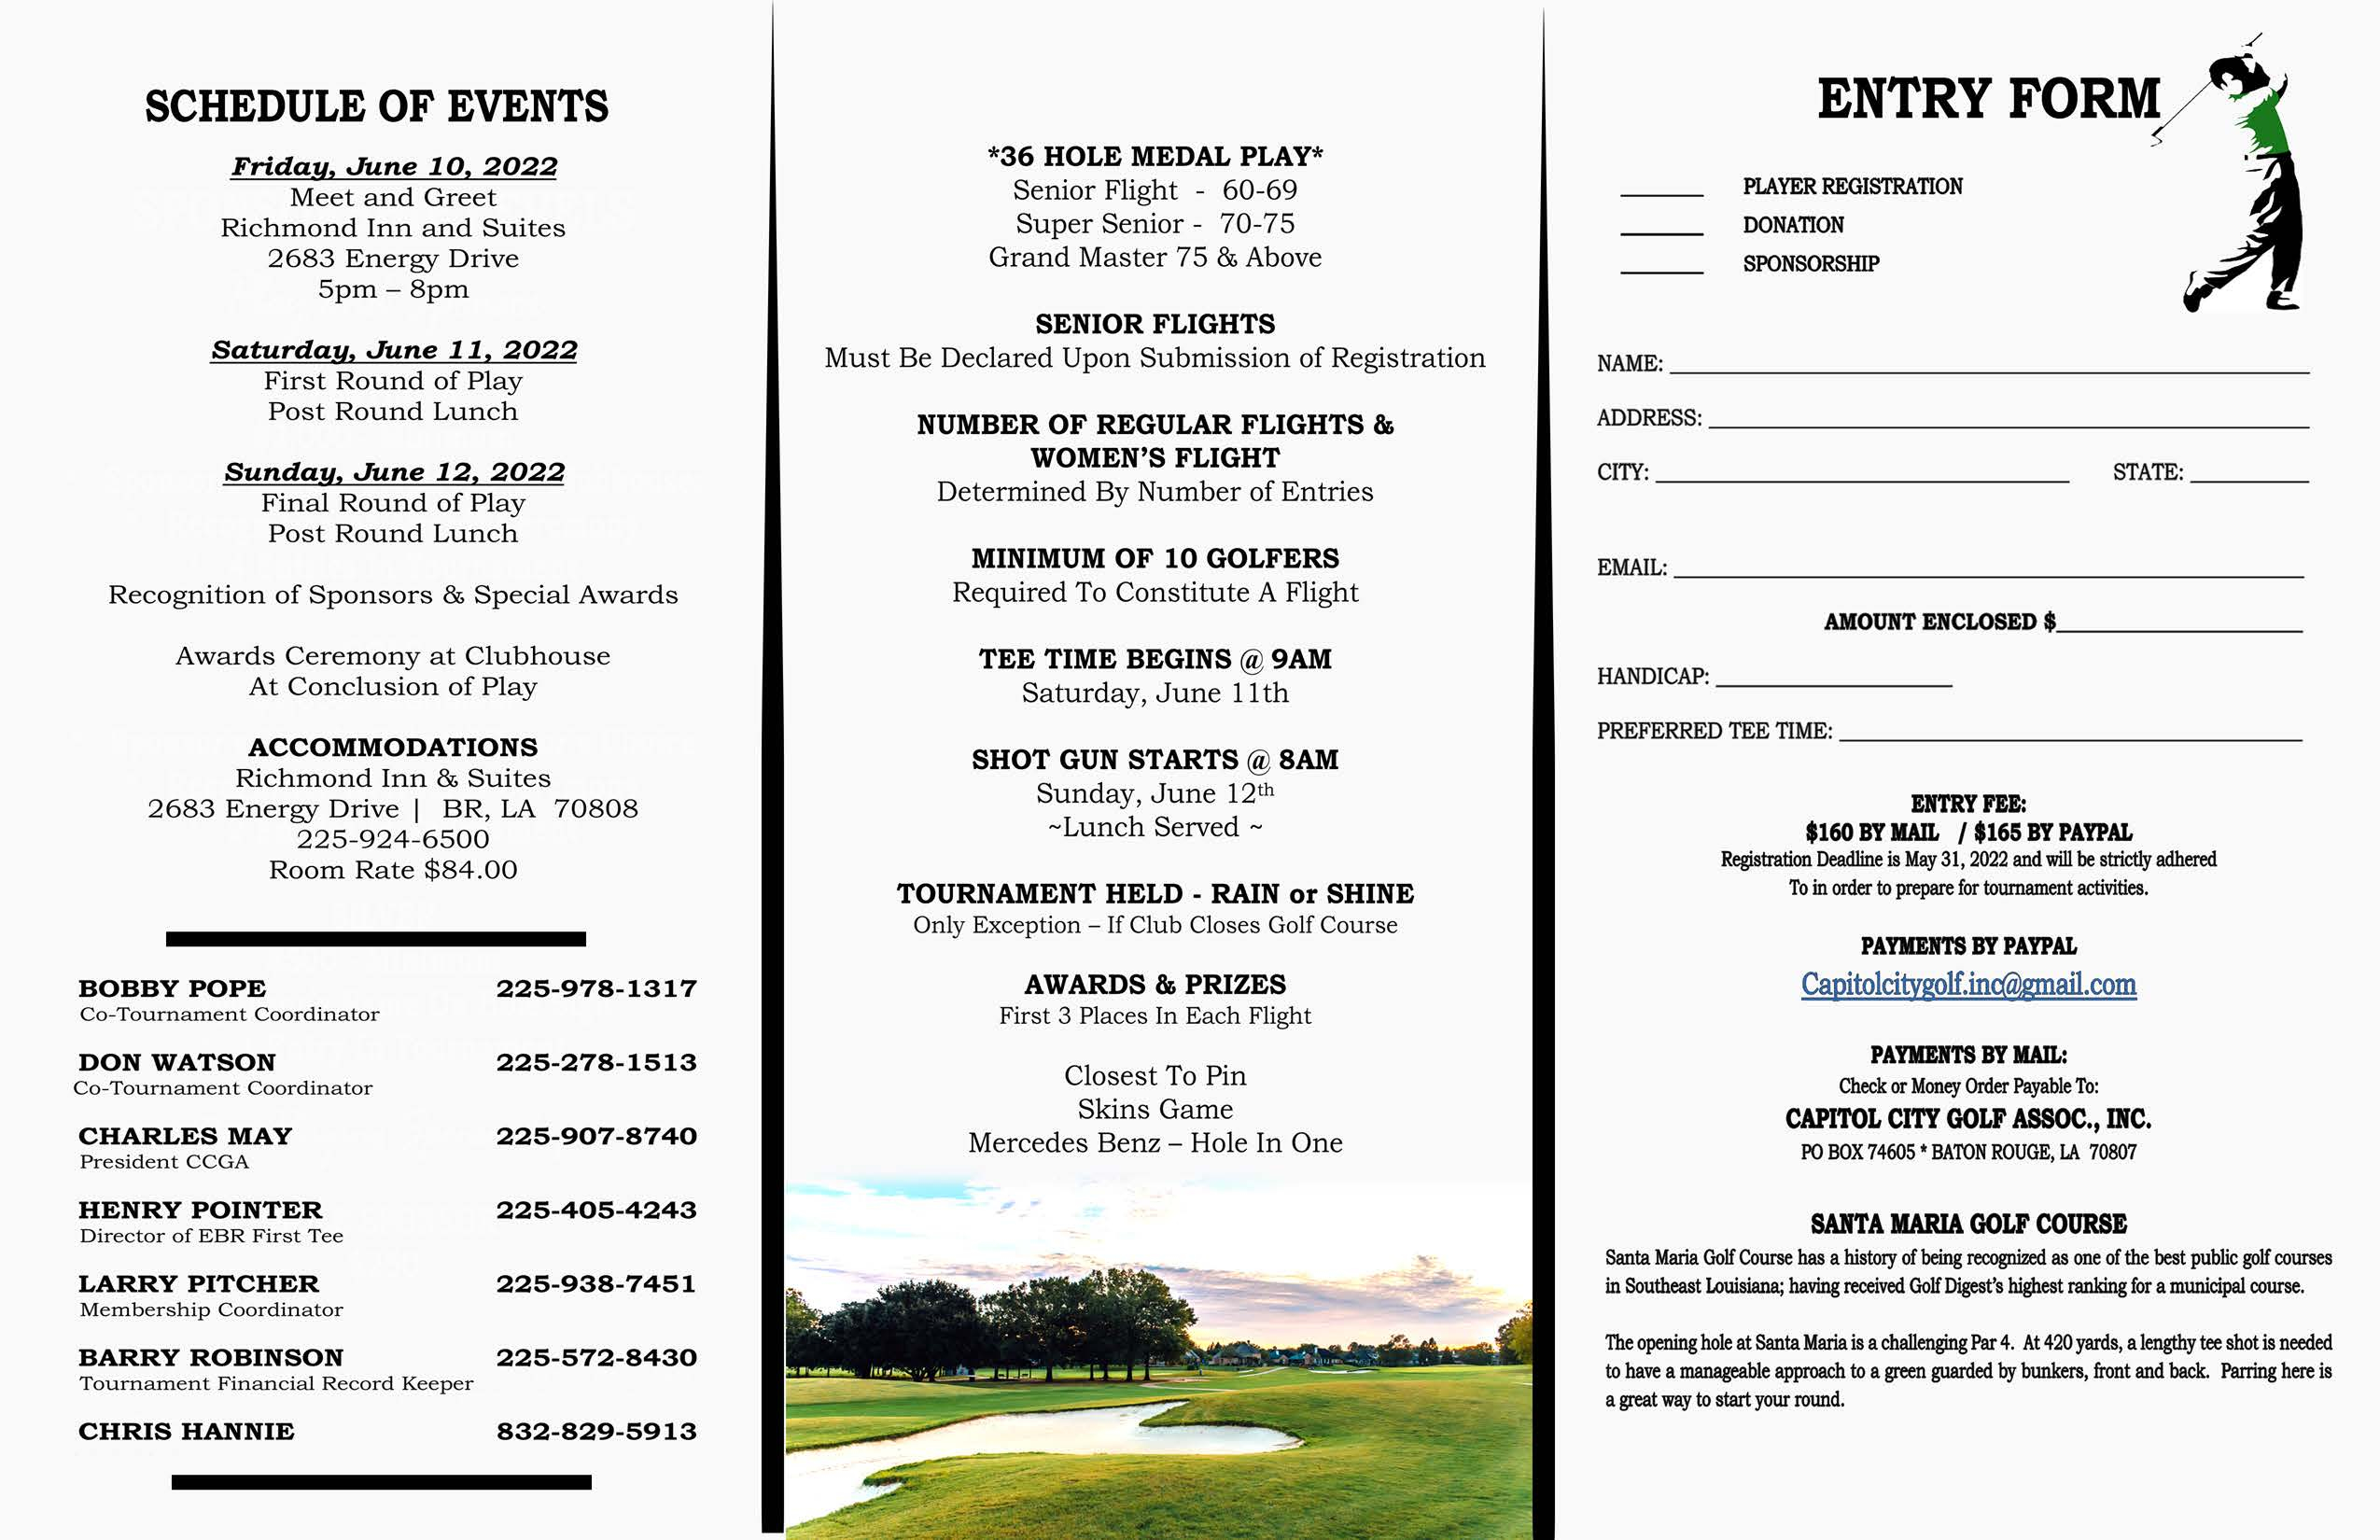 Registration Capitol City annual golf tournament